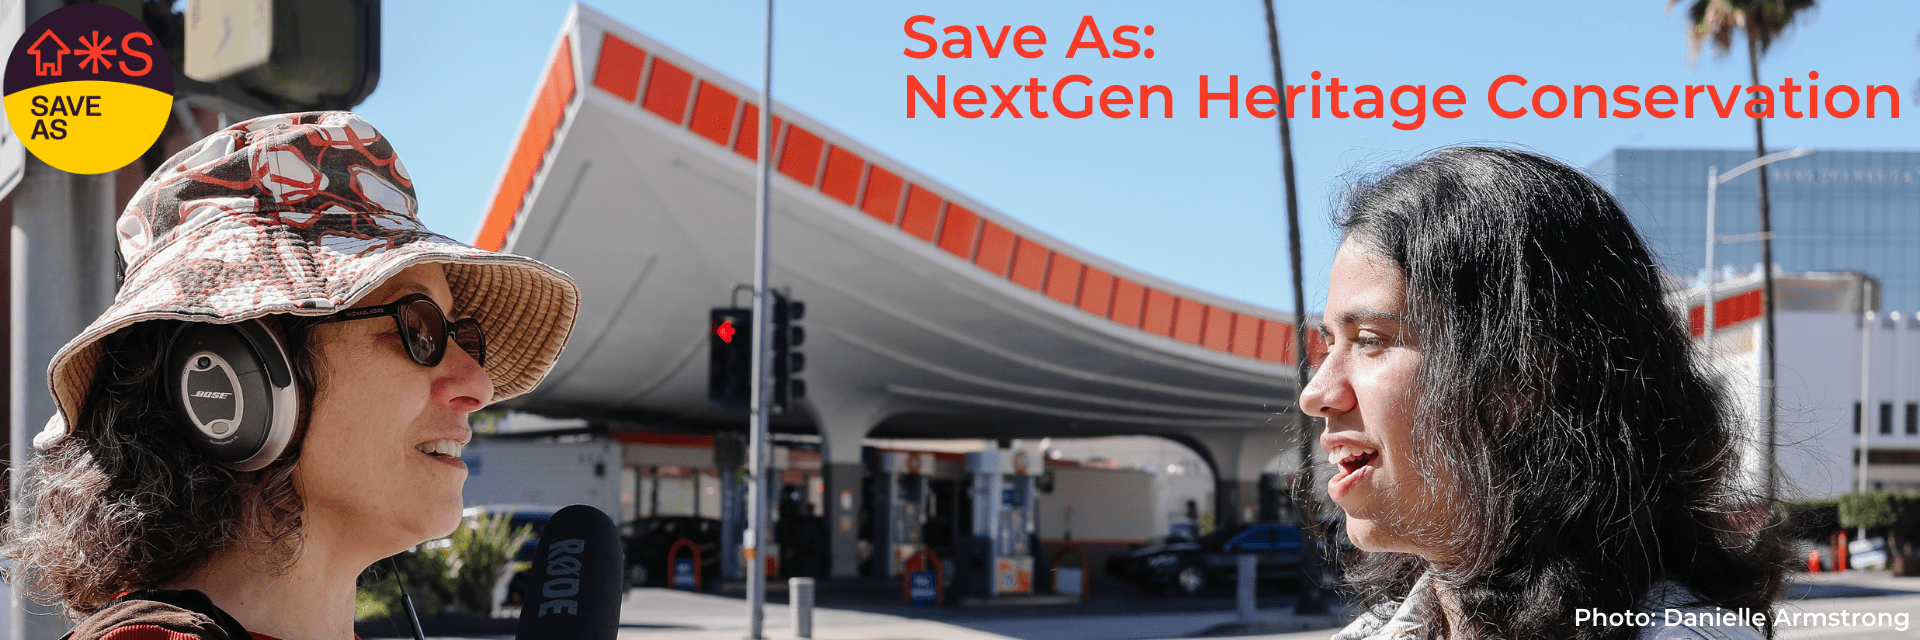 Save As | NextGen Heritage Conservation logo